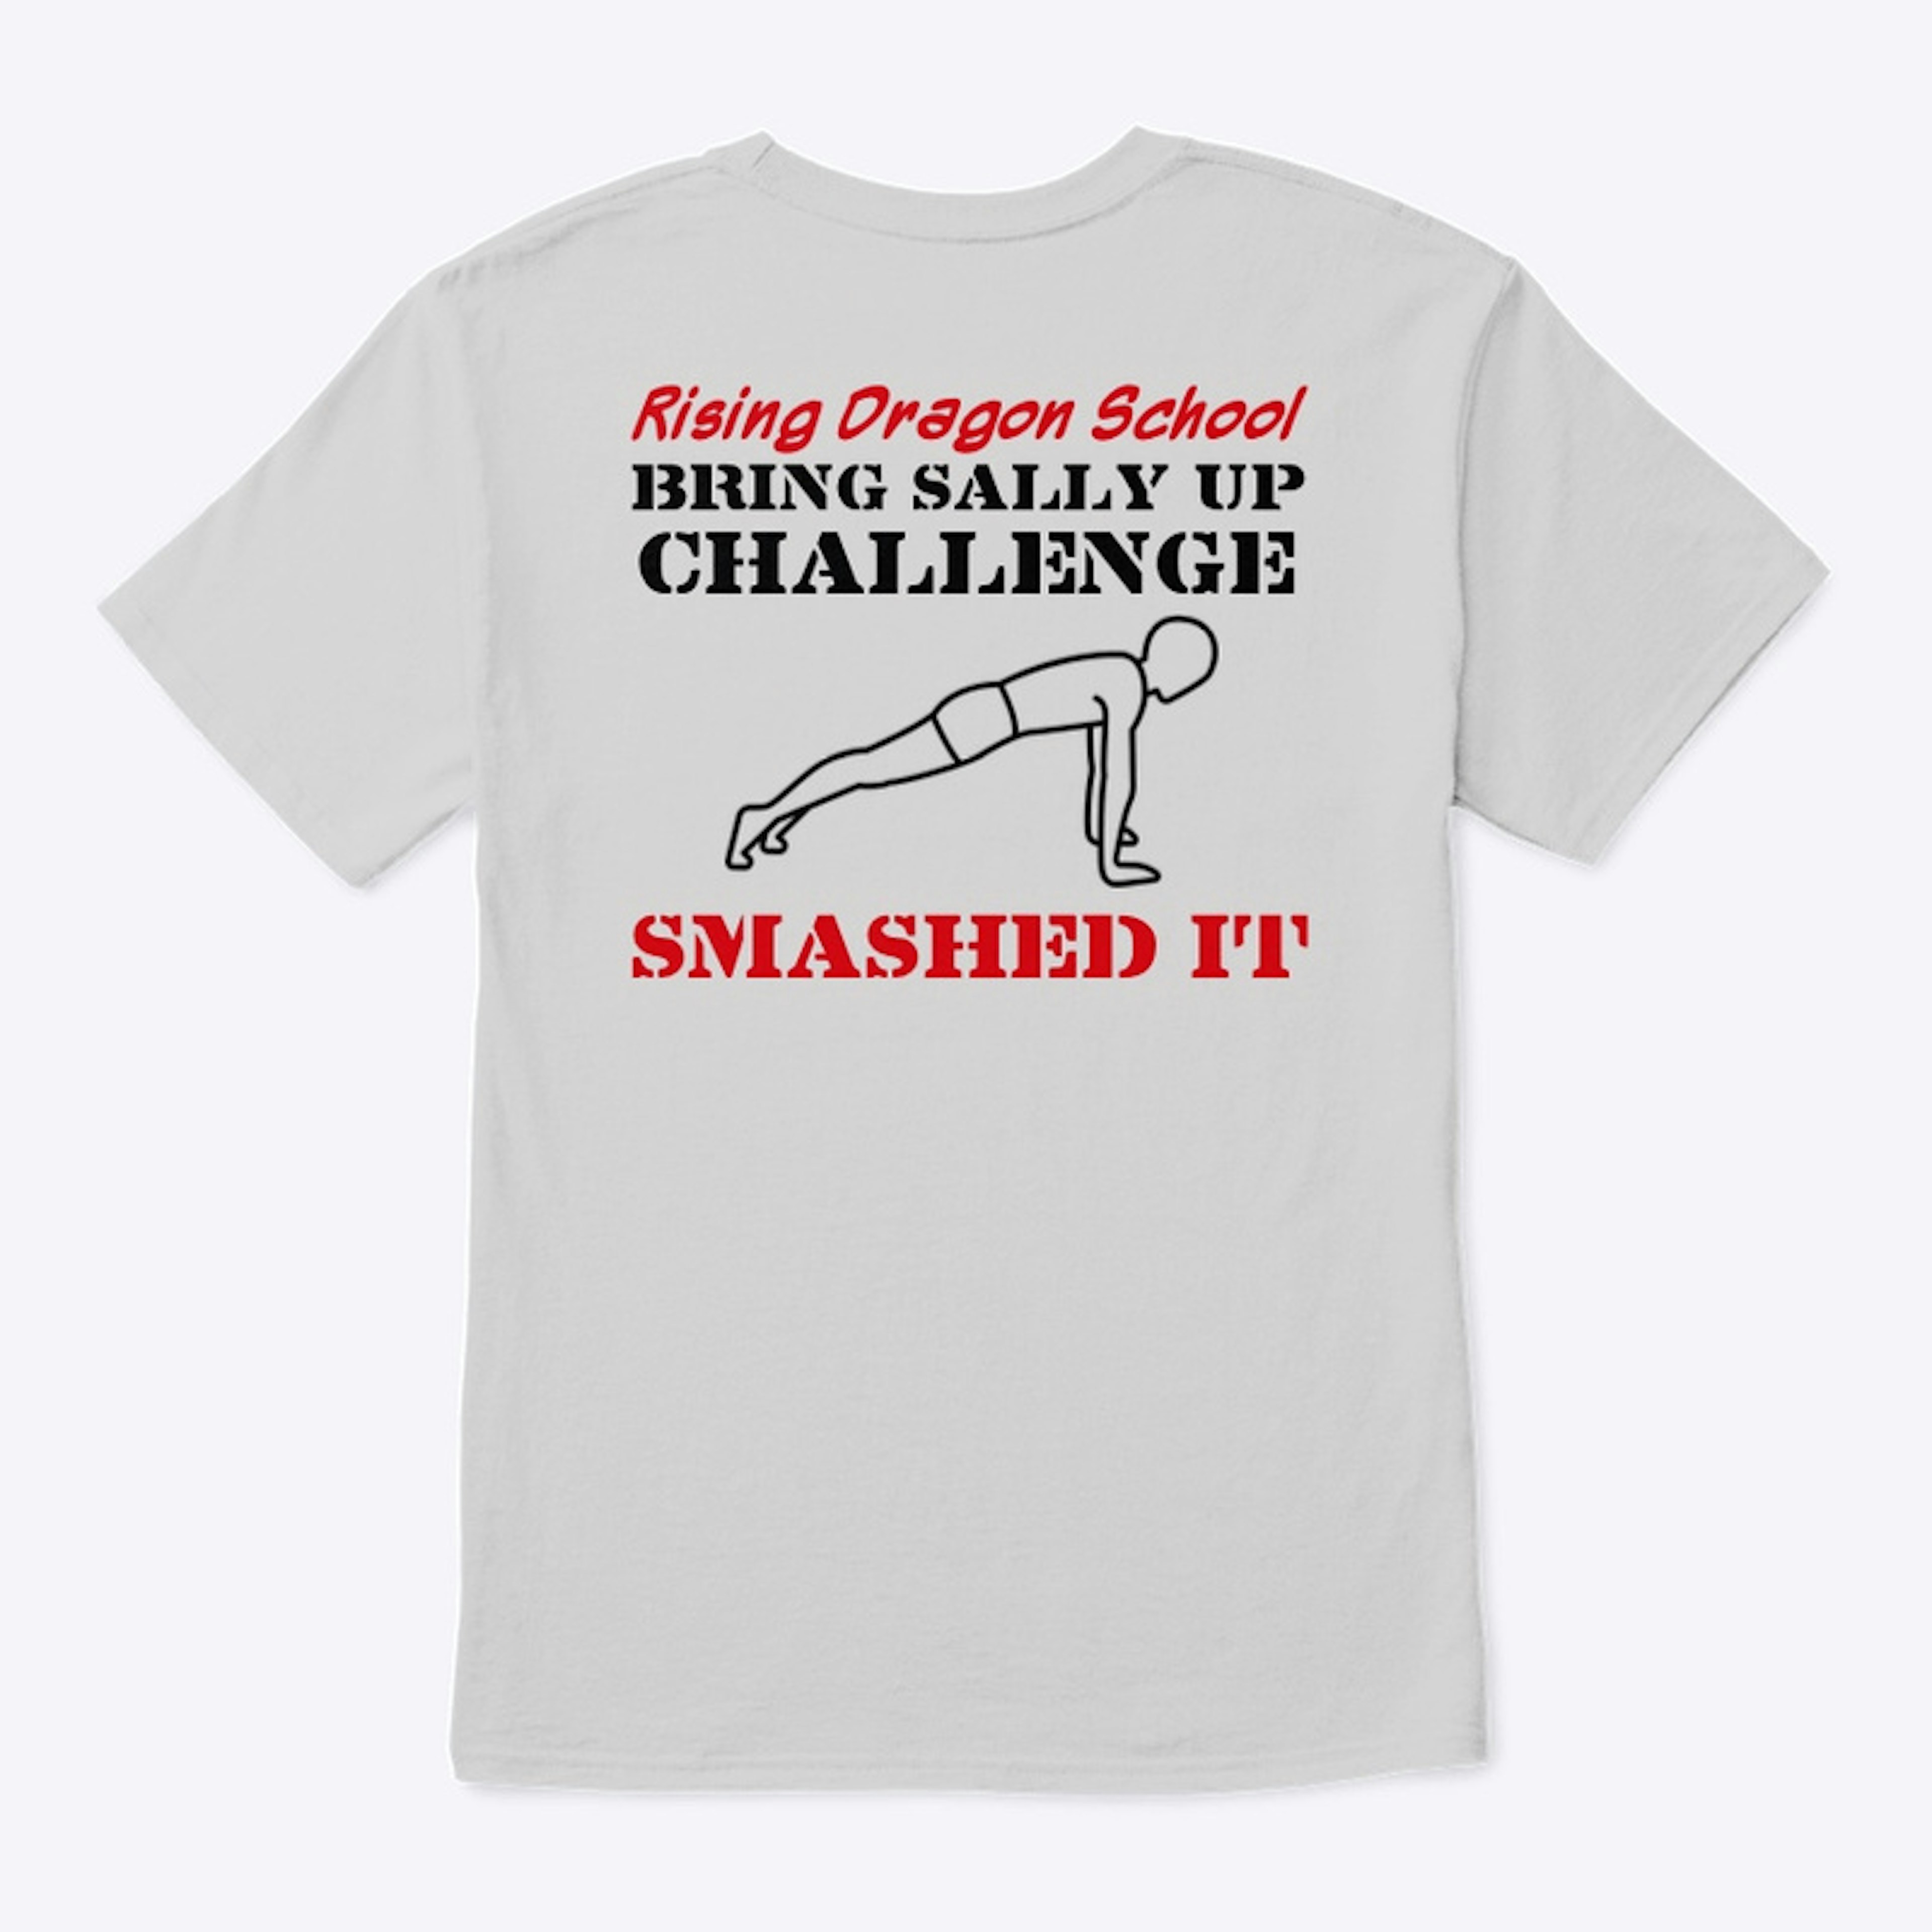 Bring Sally Up Push Up Challenge T-Shirt